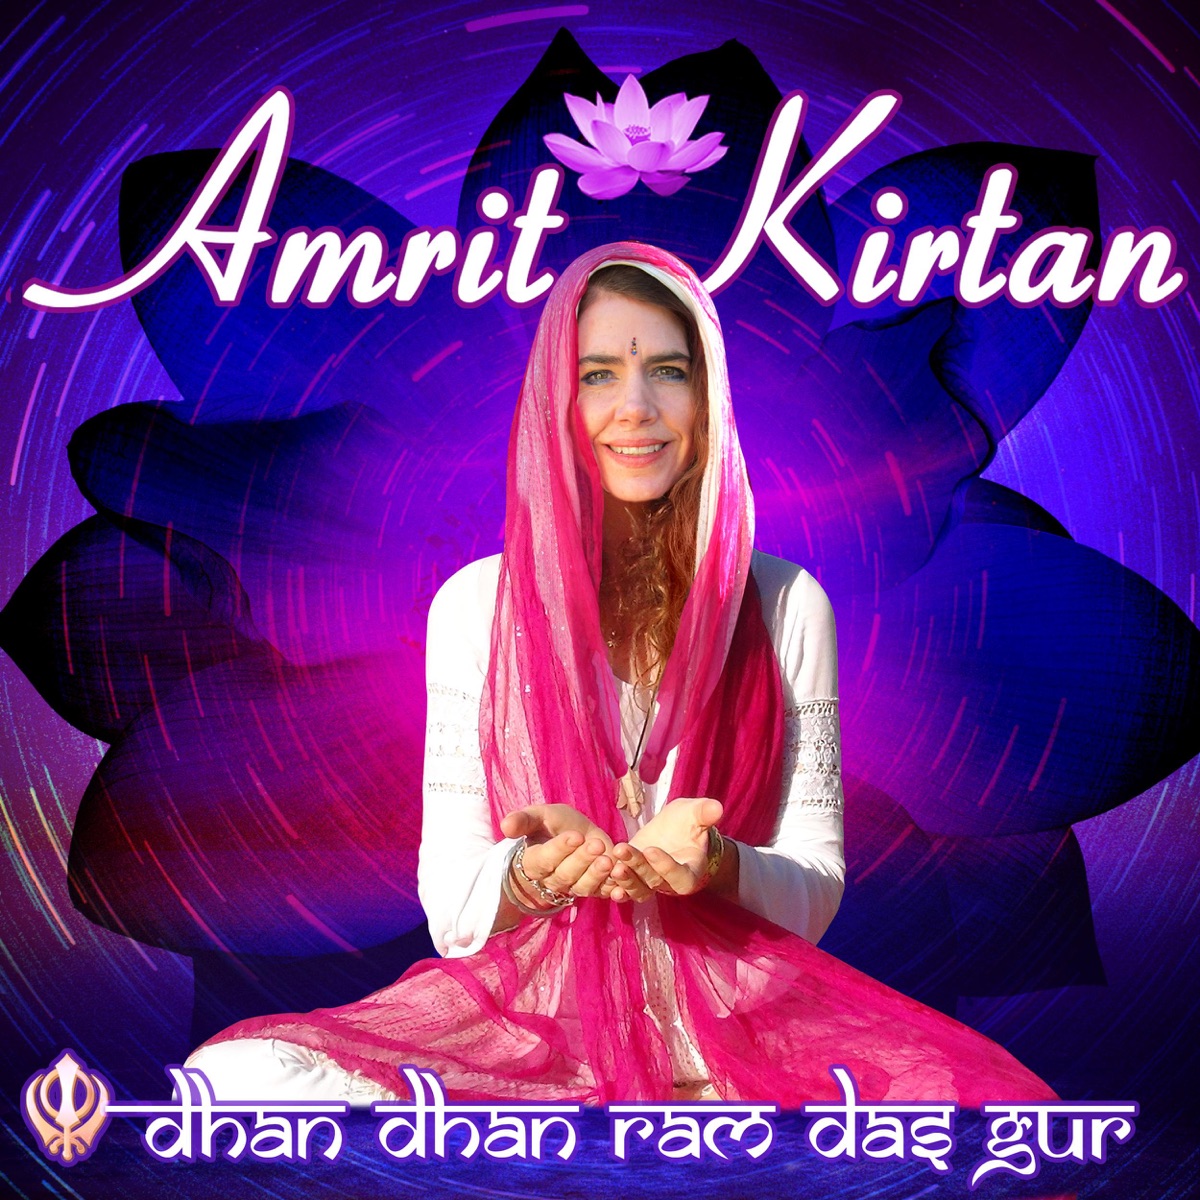 Dhan Dhan Ram Das Gur by Amrit Kirtan on Apple Music